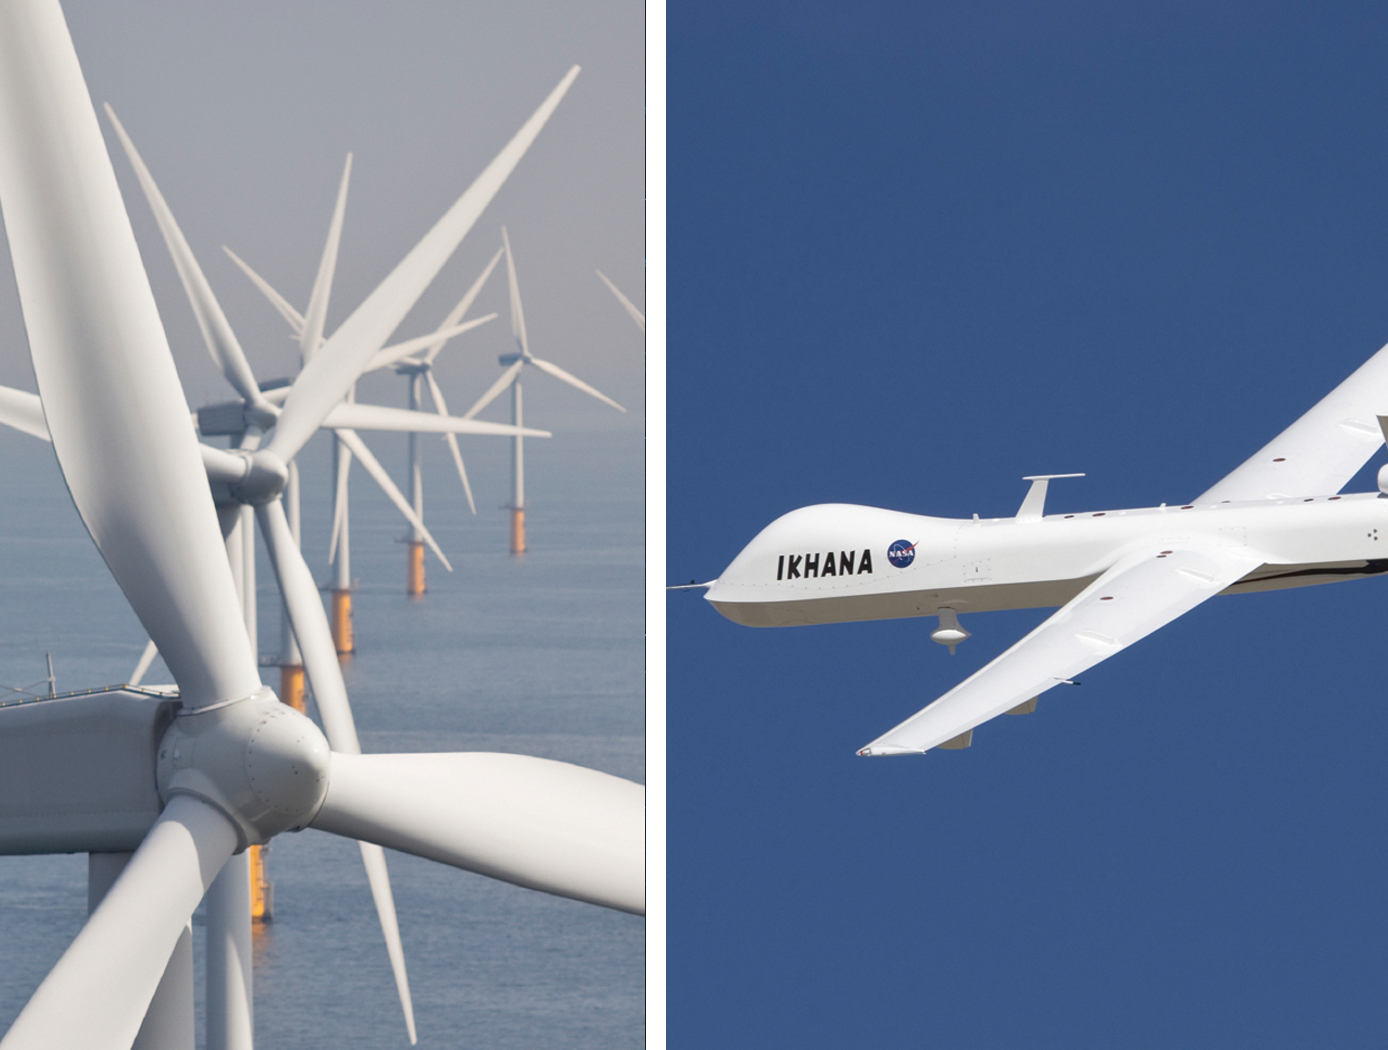 Ikhana aircraft, wind turbine